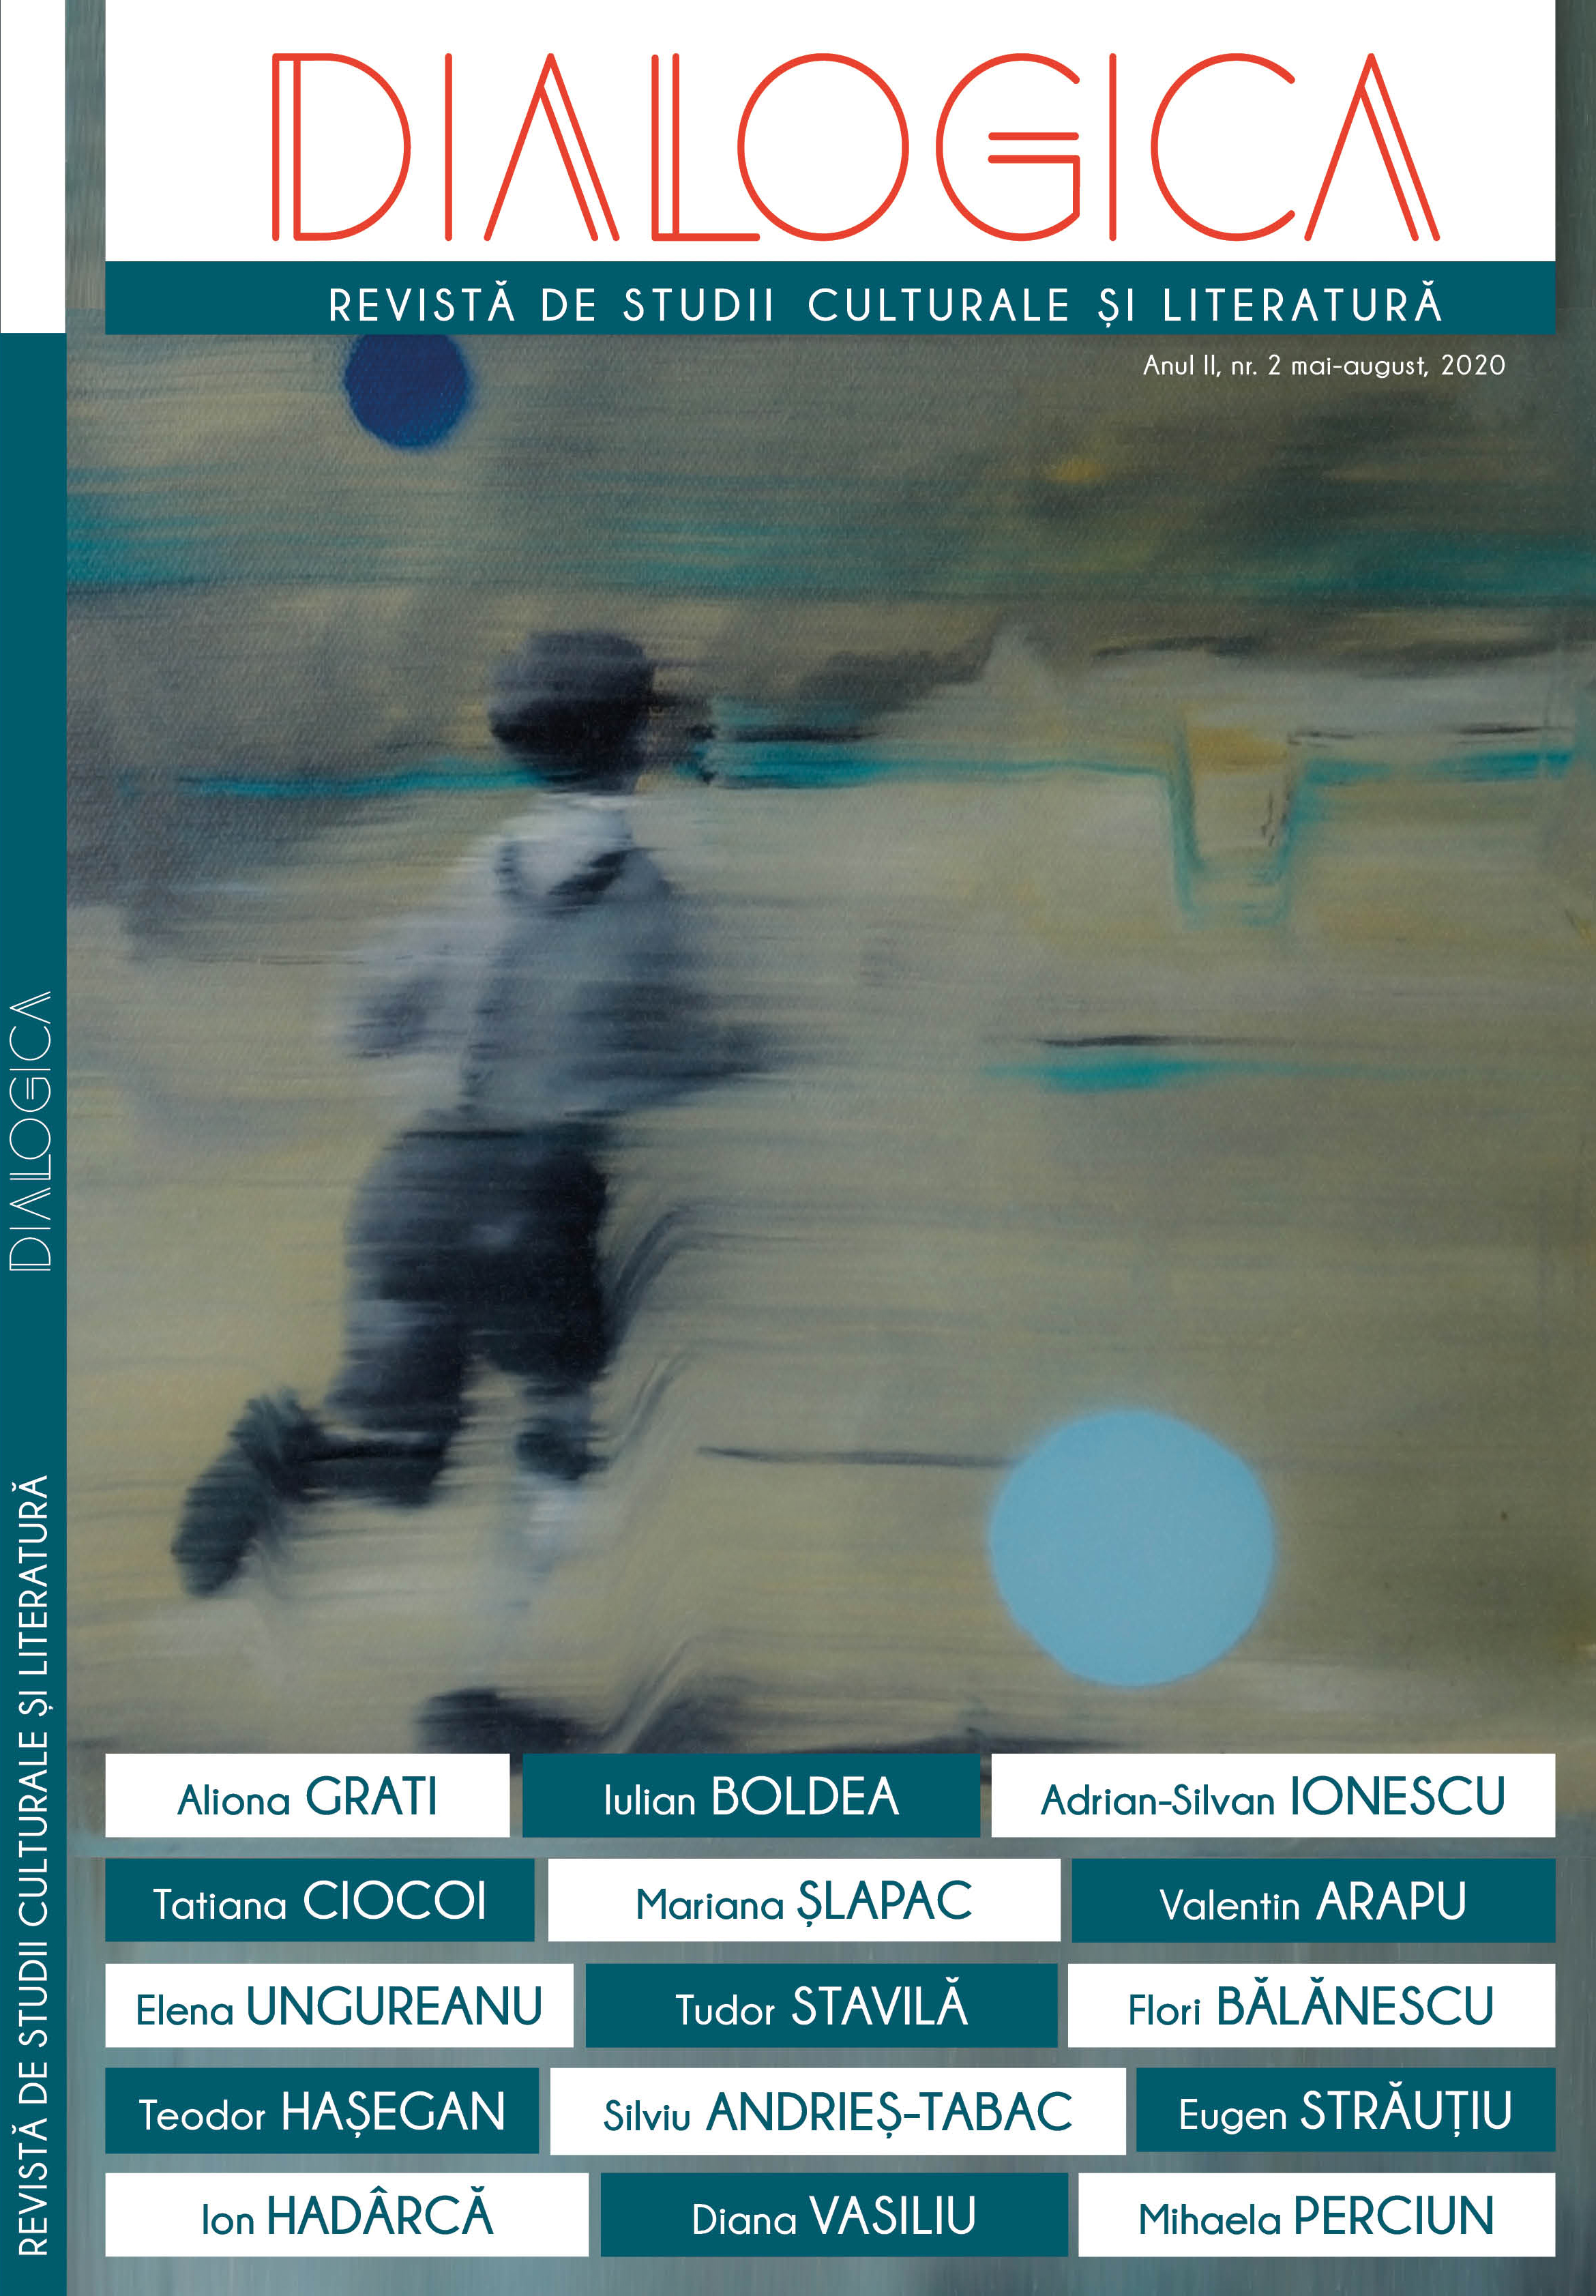 Petru Cimpoeşu’s prose. Limited liability fiction Cover Image